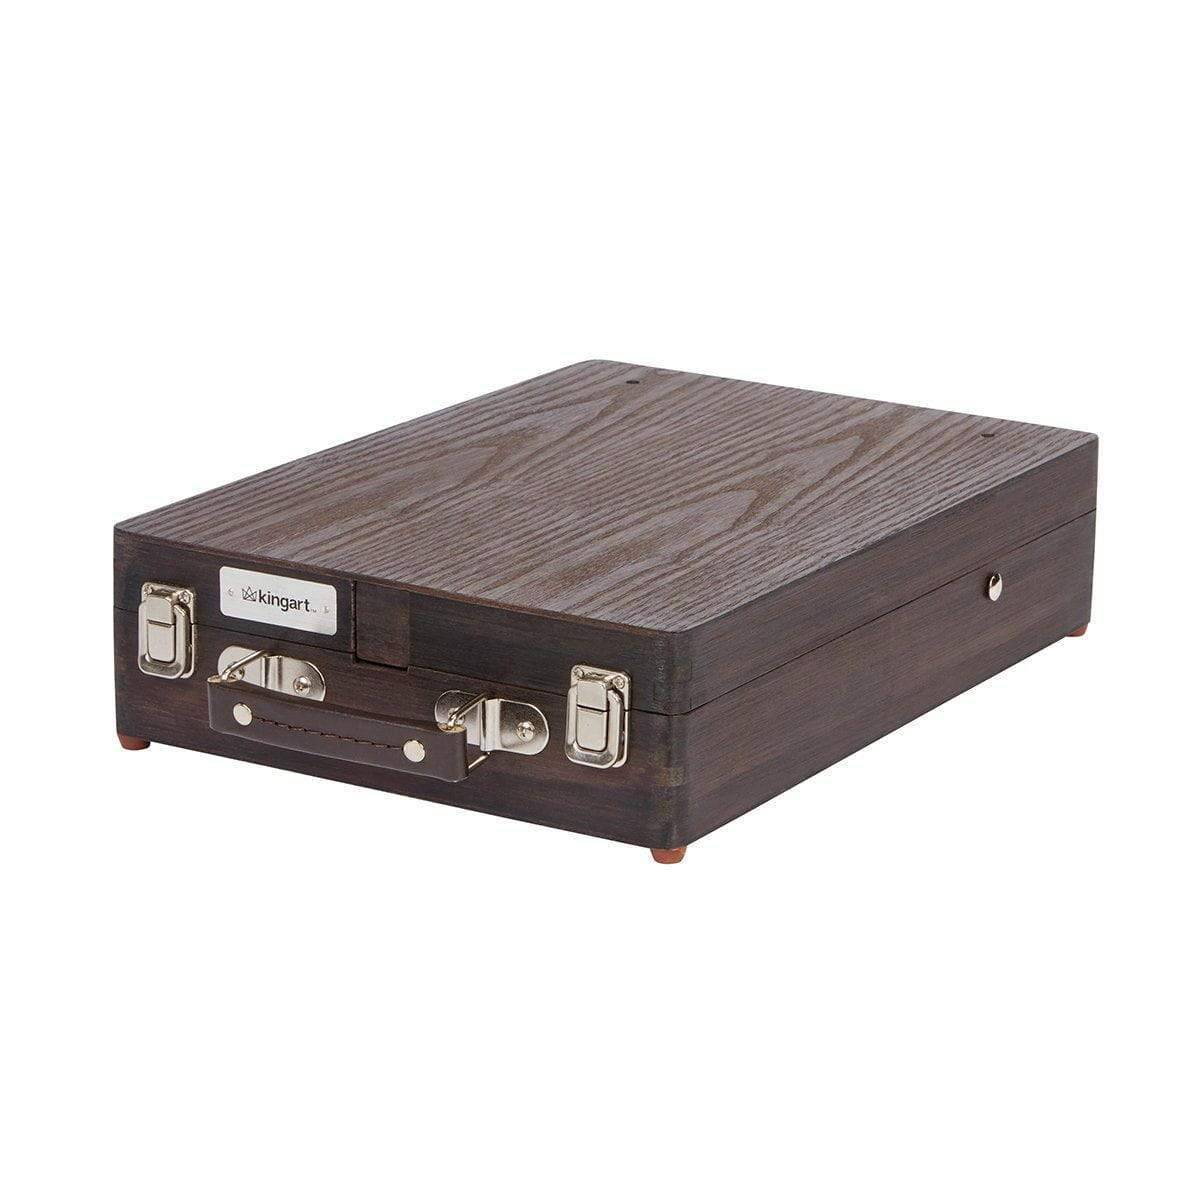 Falling in Art Wooden Tabletop Easel, Solid Wood Sketchbox Desktop Eas –  WoodArtSupply